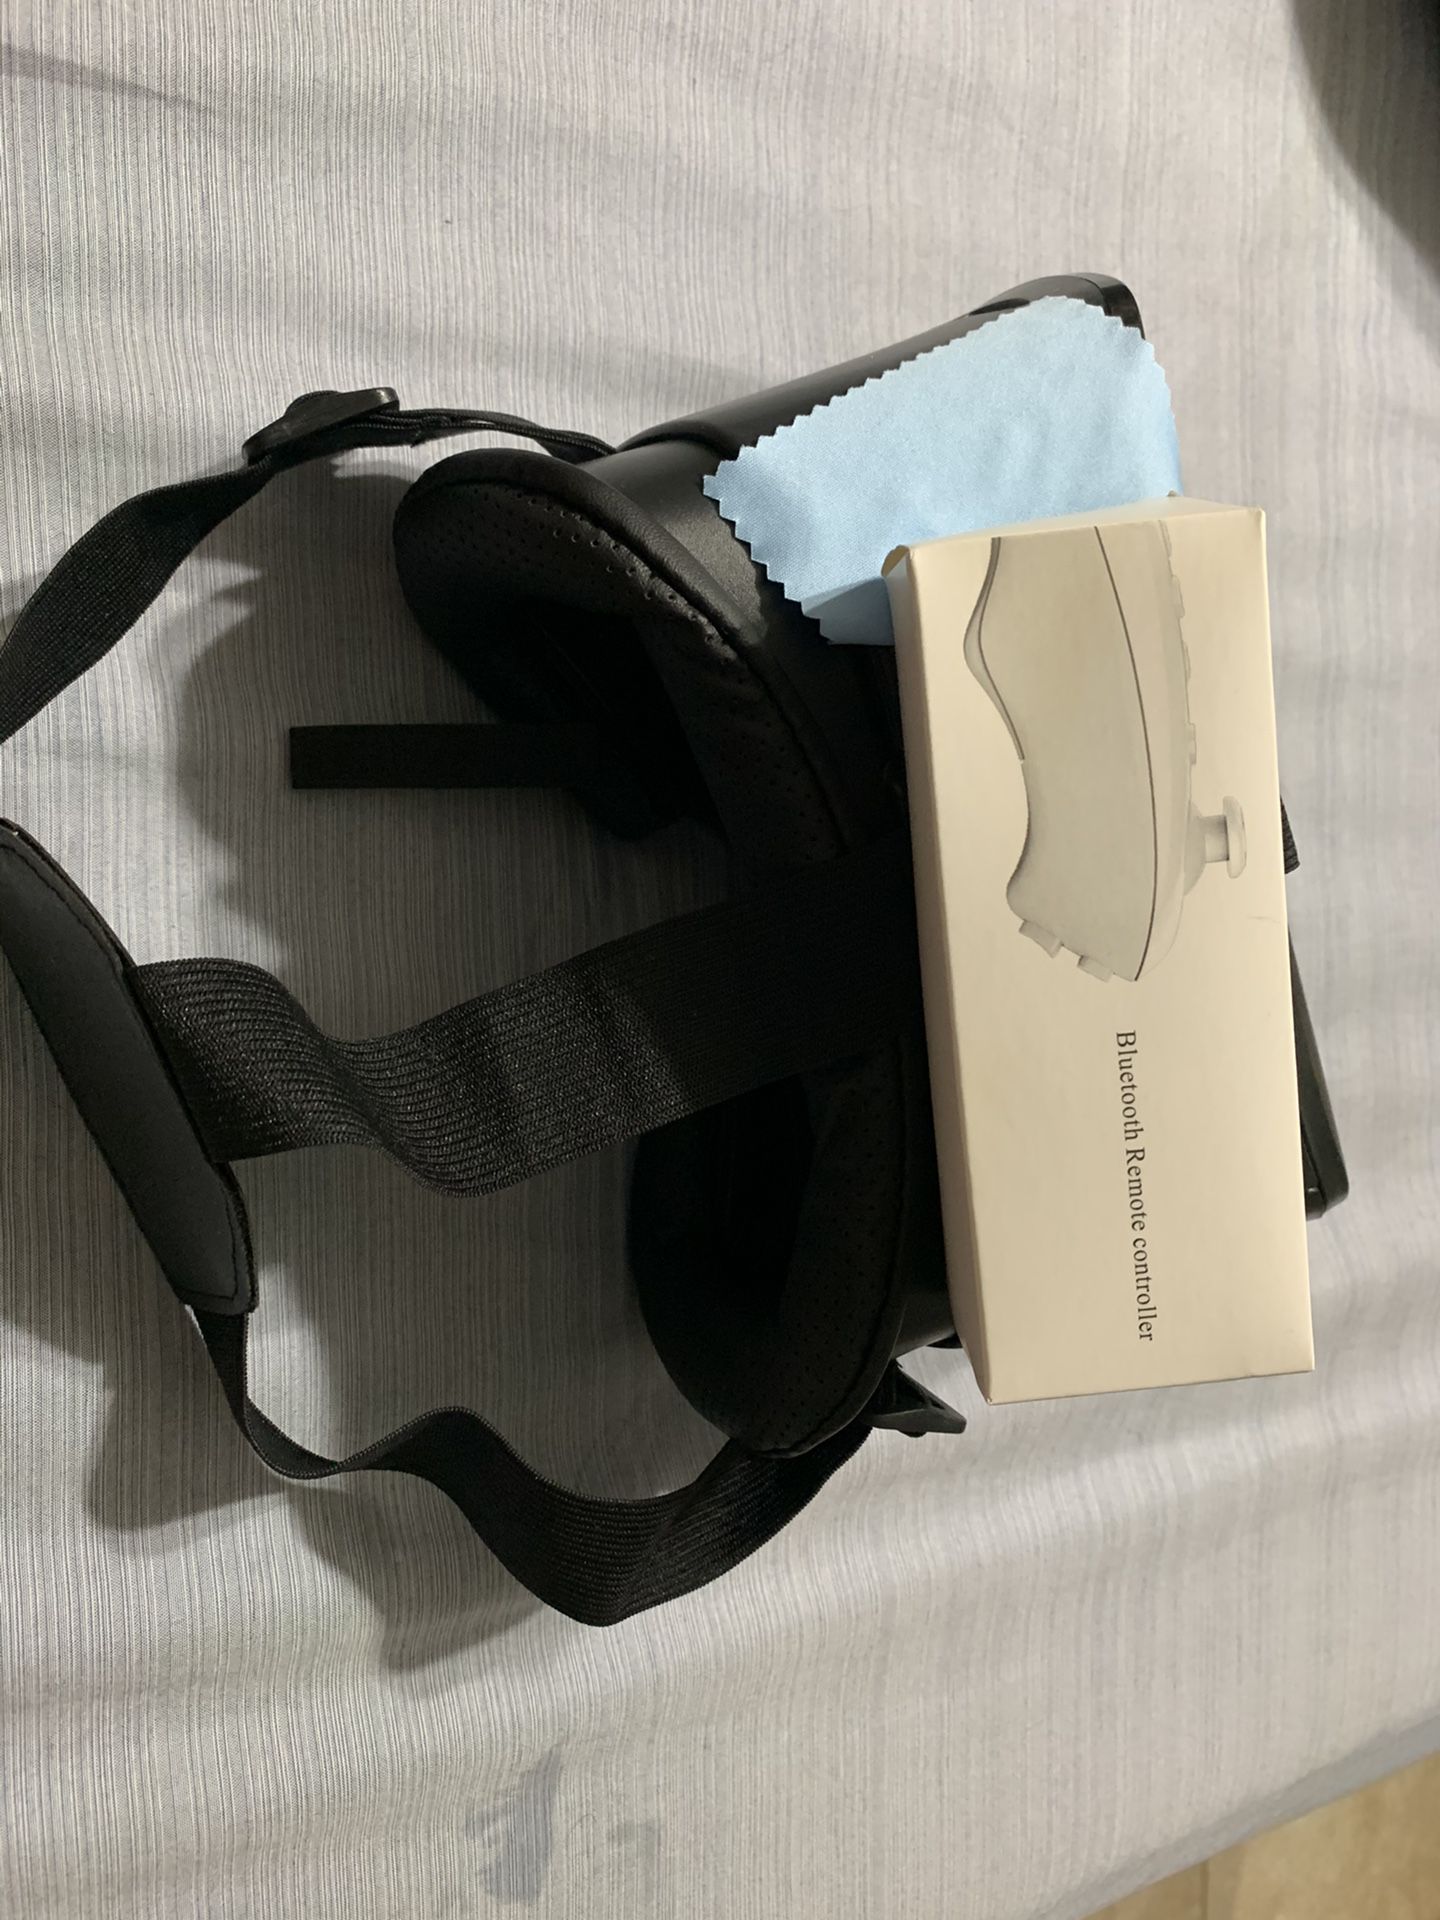 EVO VR Starter kit for your smartphone